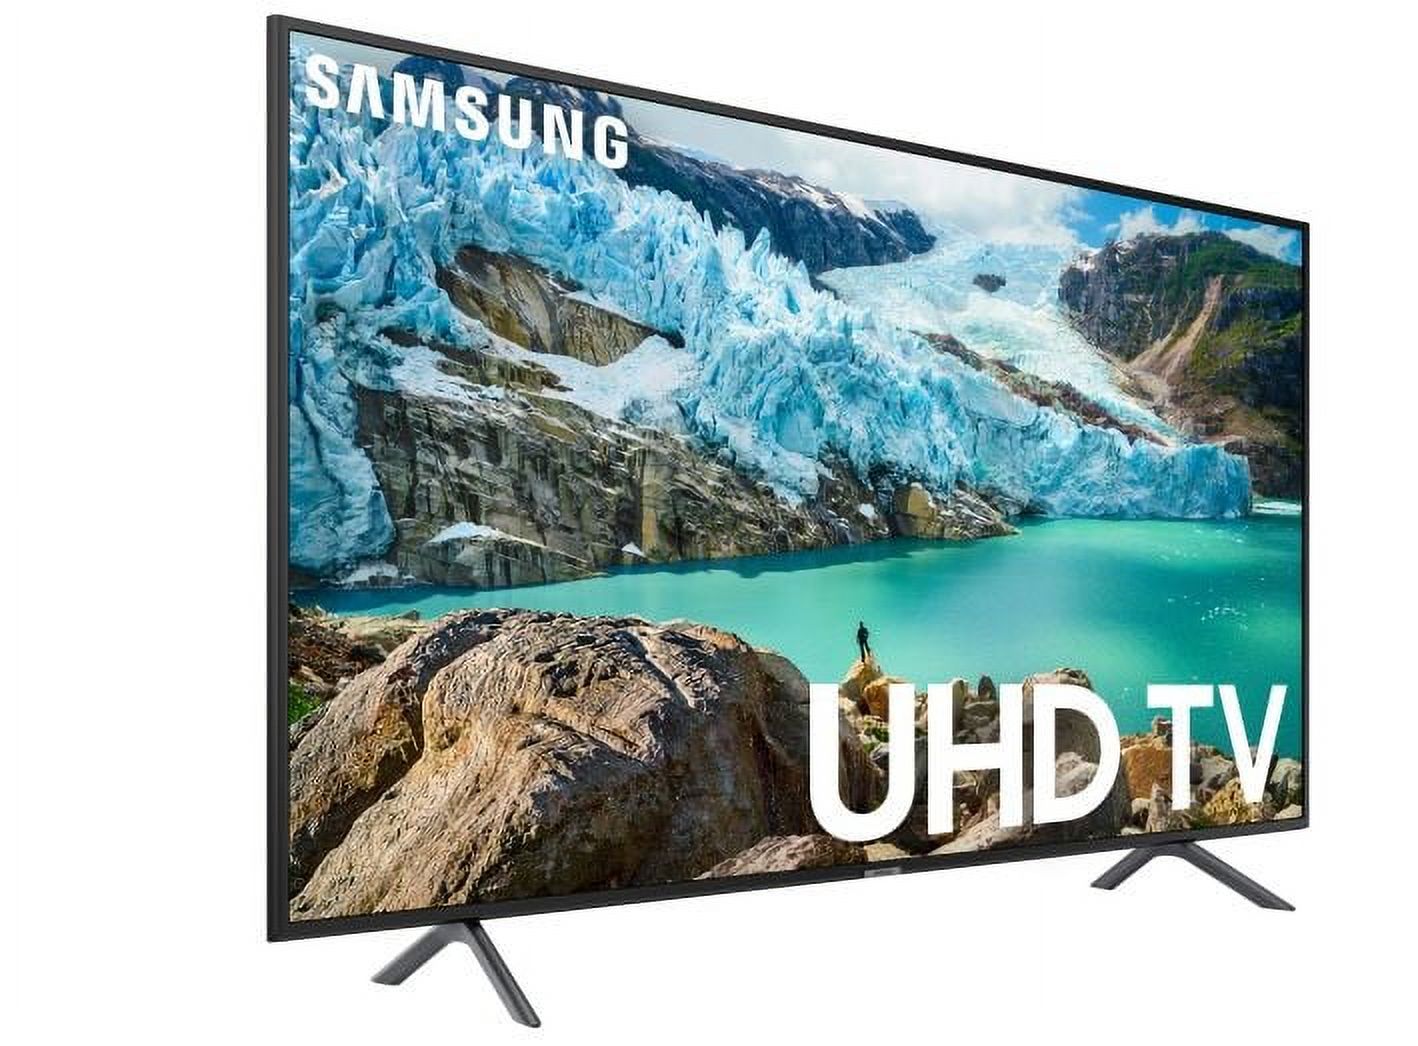 SAMSUNG 58" Class 4K Ultra HD (2160P) HDR Smart LED TV UN58RU7100 (2019 Model) - image 3 of 9